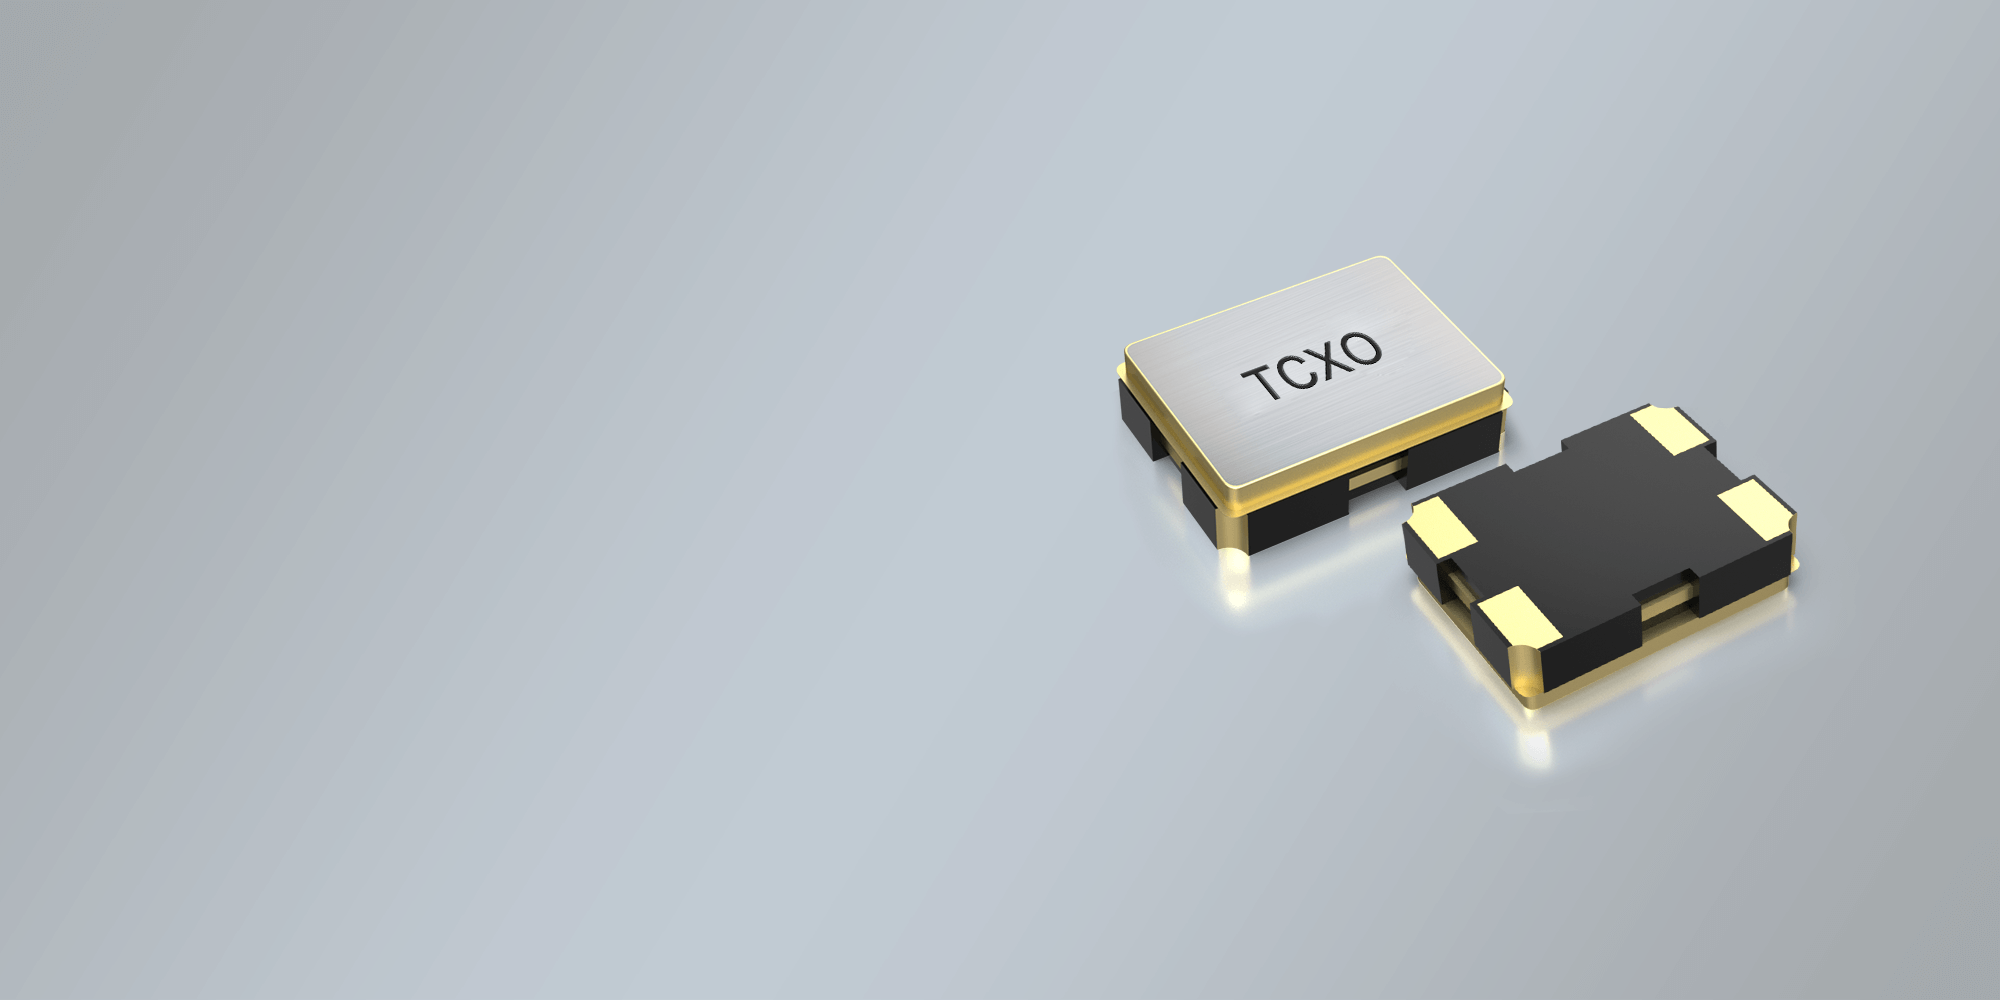 SMD TCXO 16.0 - 60.0 MHz QUARZ OSZILLATOR